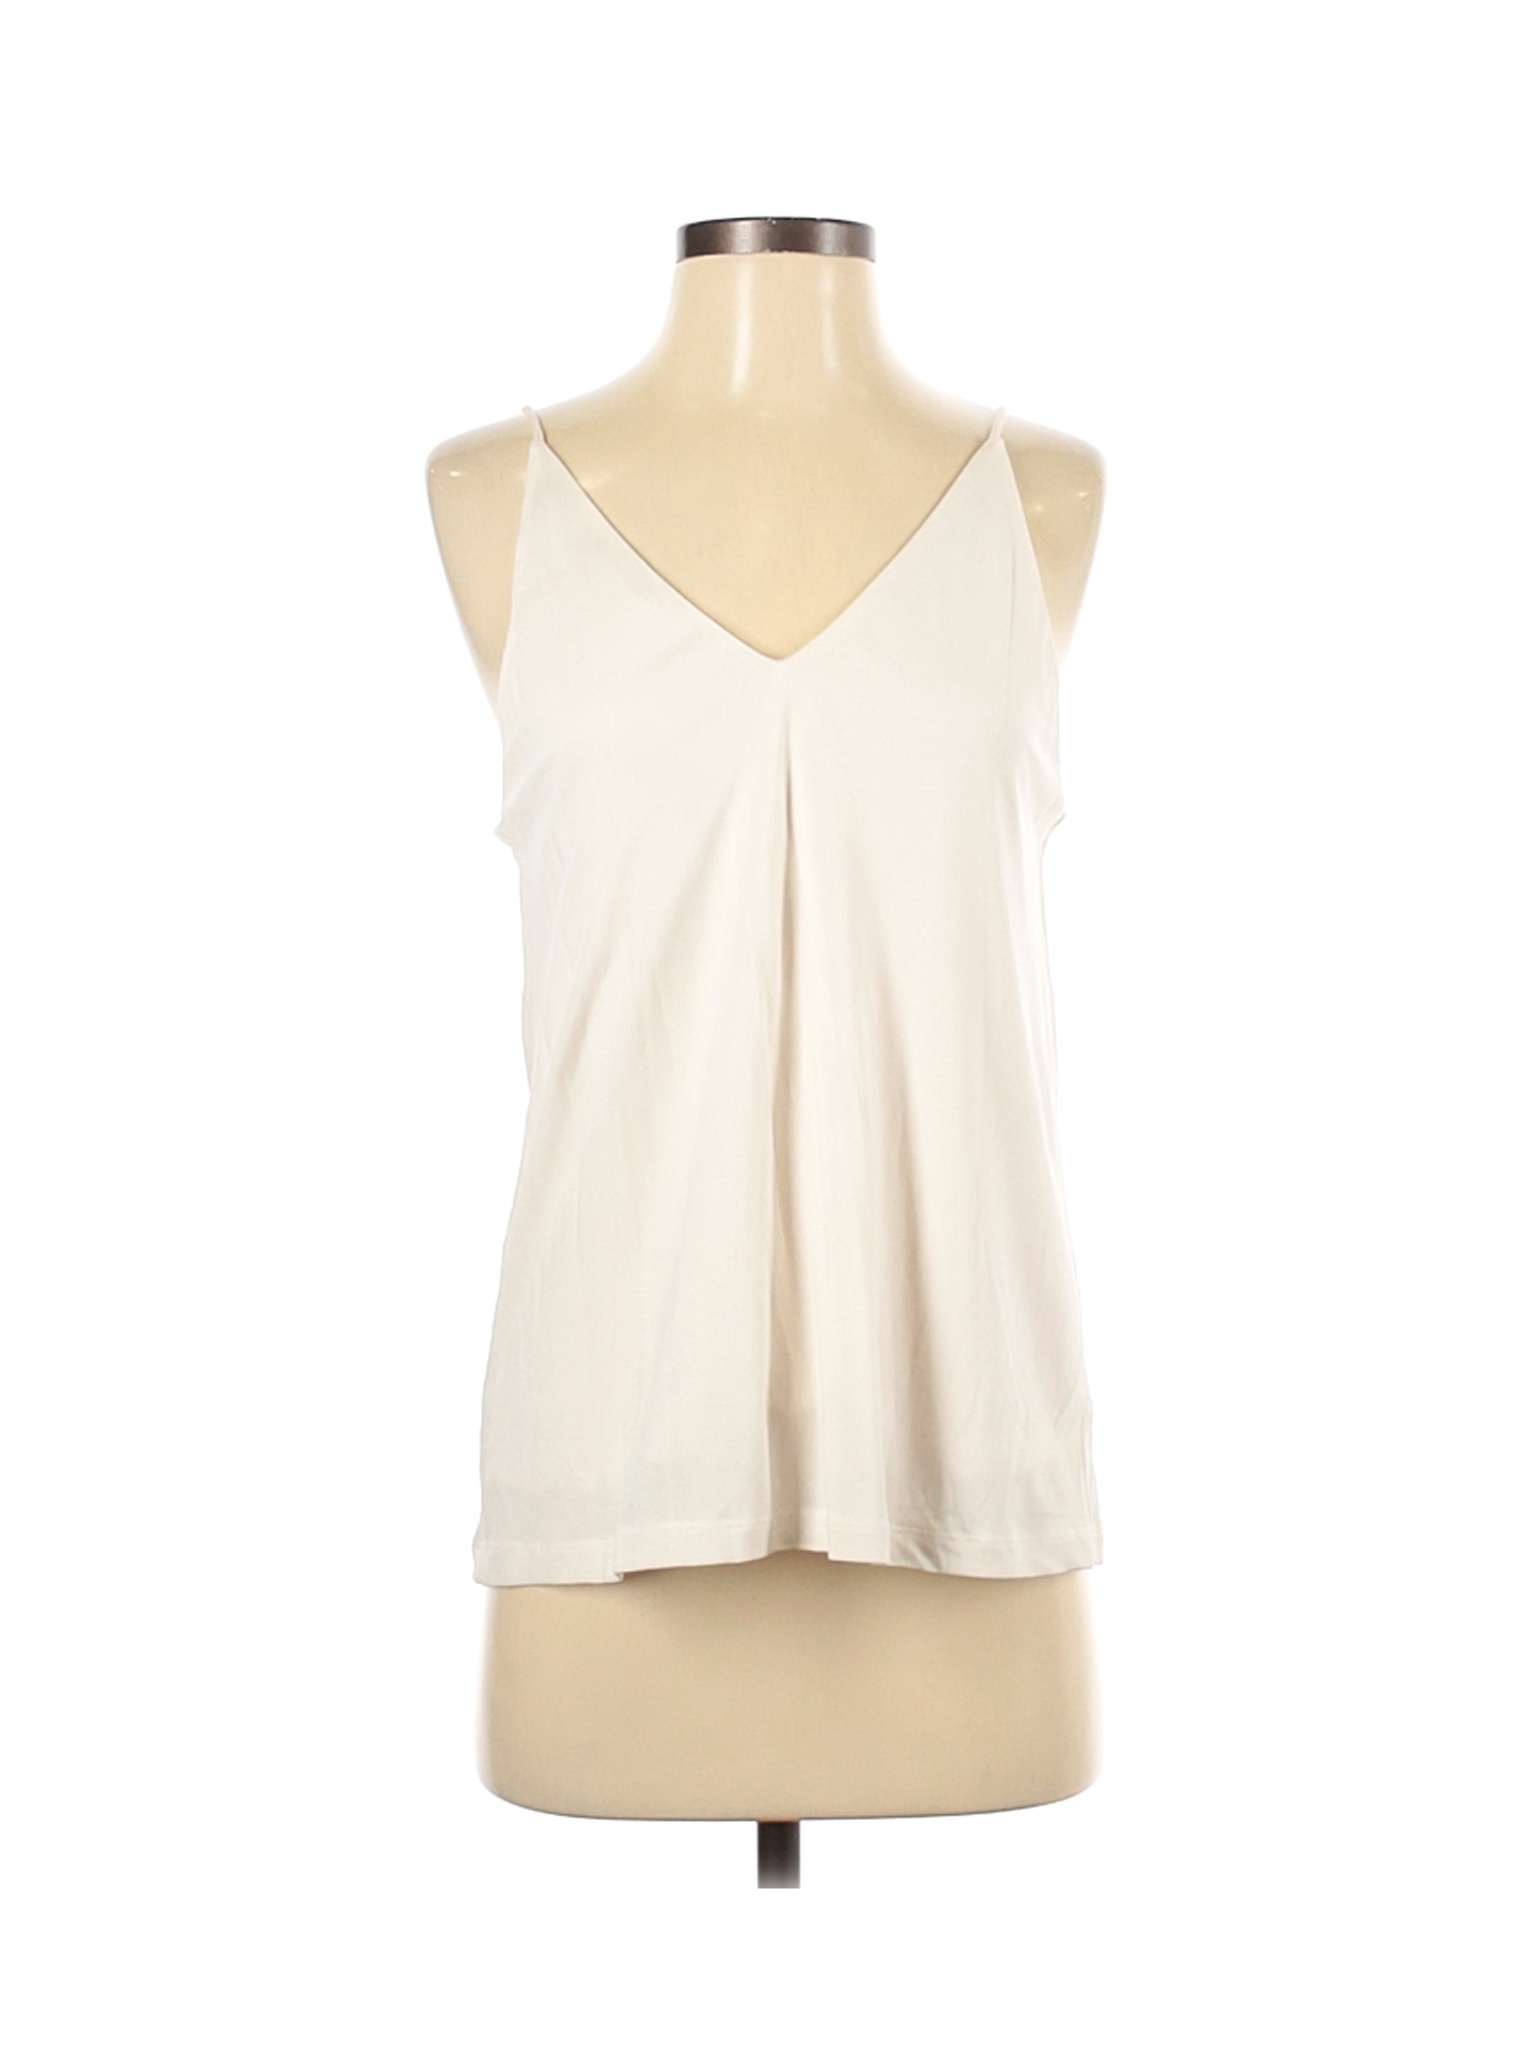 NWT H&M Women Ivory Sleeveless Top S | eBay